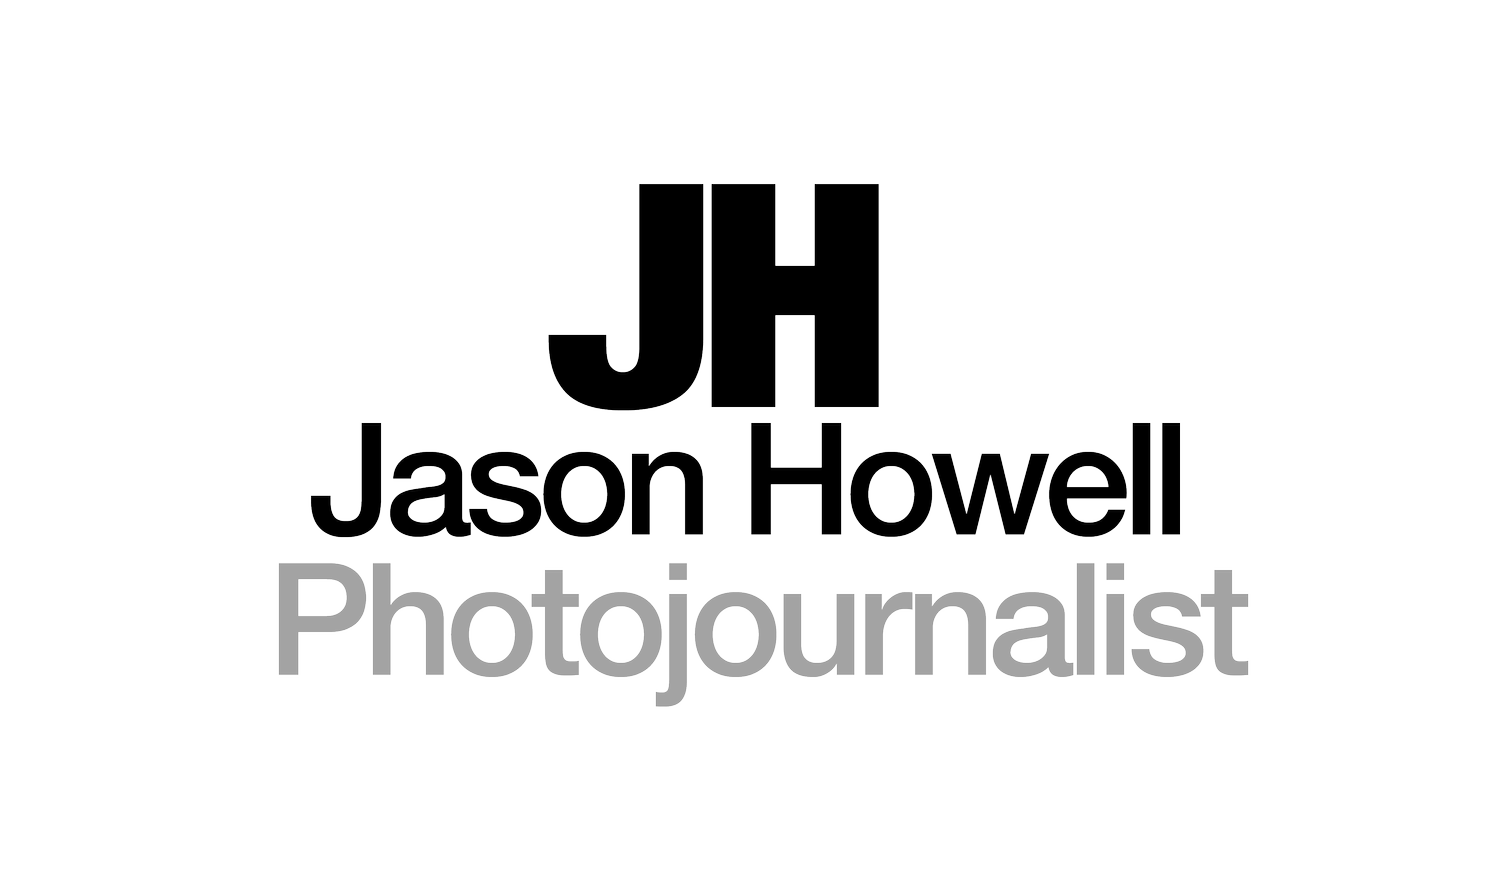 thejasonhowell | photojournalist